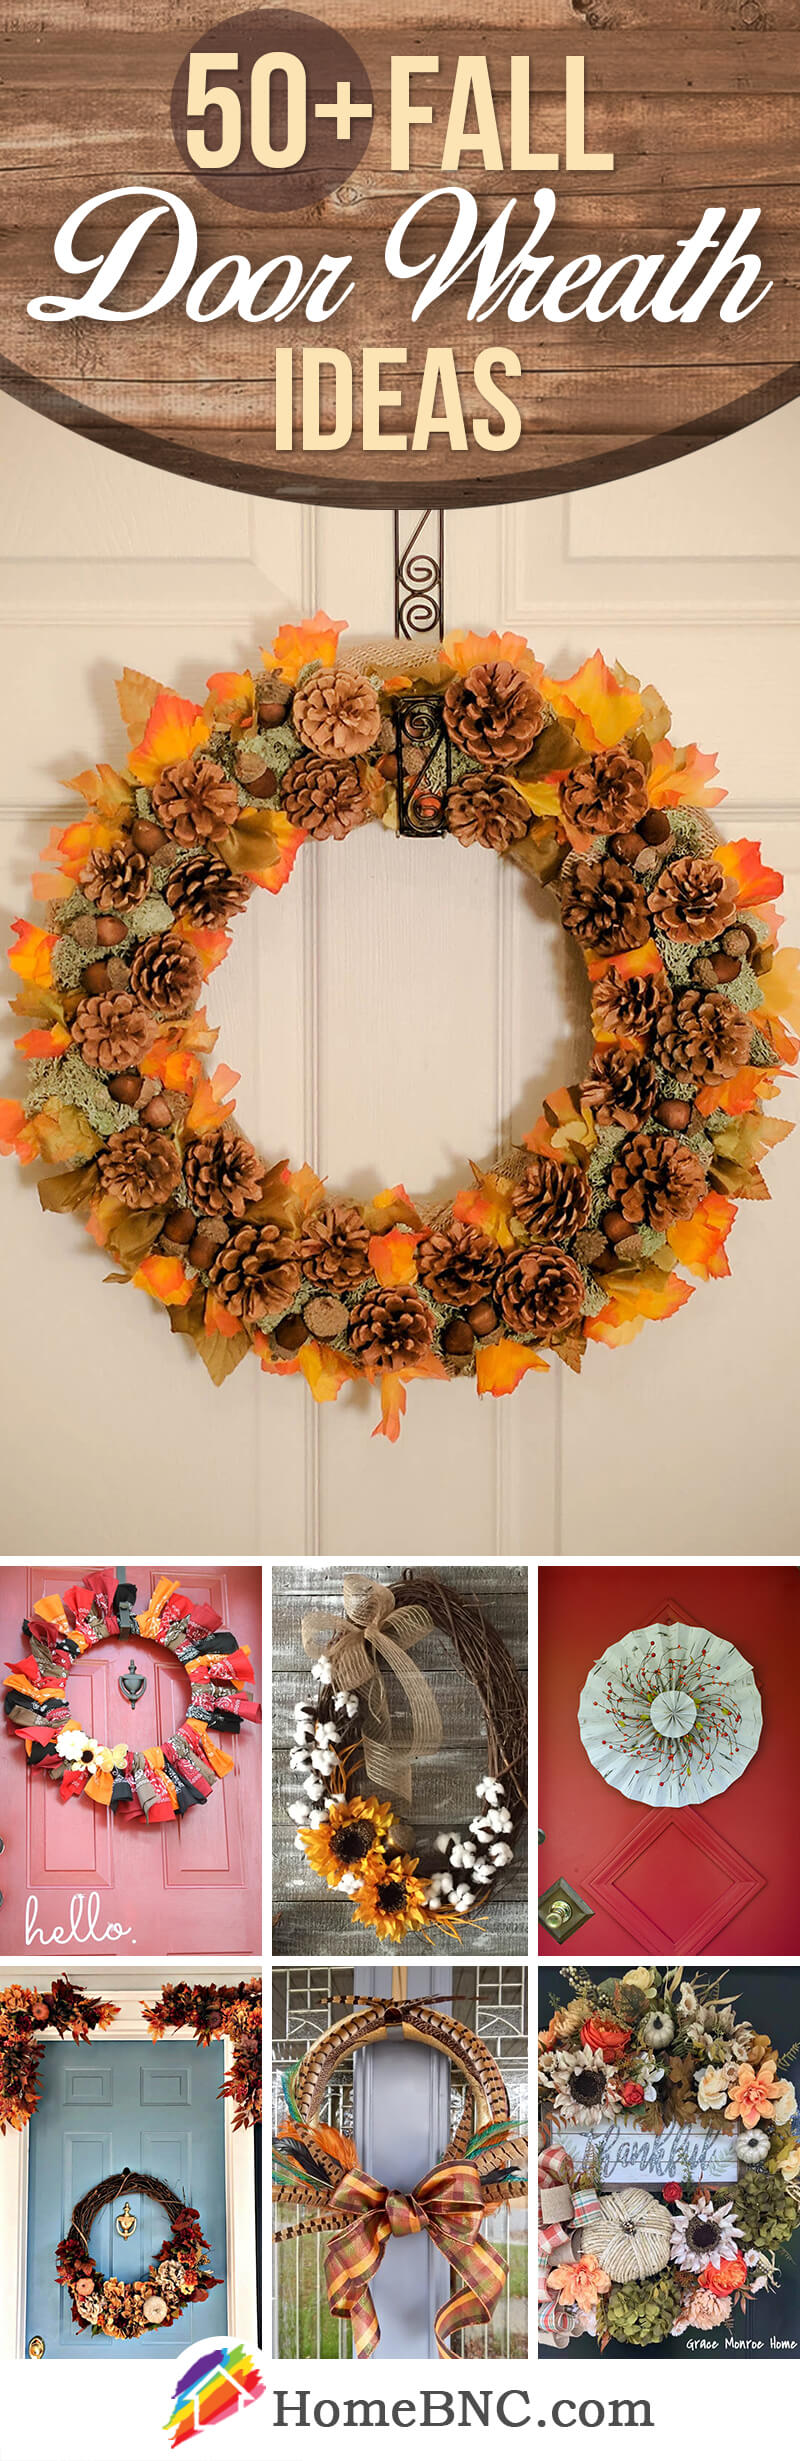 Fall Wreath-FALL Decor-TWIG Door Wreath-Autumn Wreath-Rustic Wreath-Fall Home Decor-Scented Pumpkin Spice-Fall Wreaths-Custom Made Wreaths-